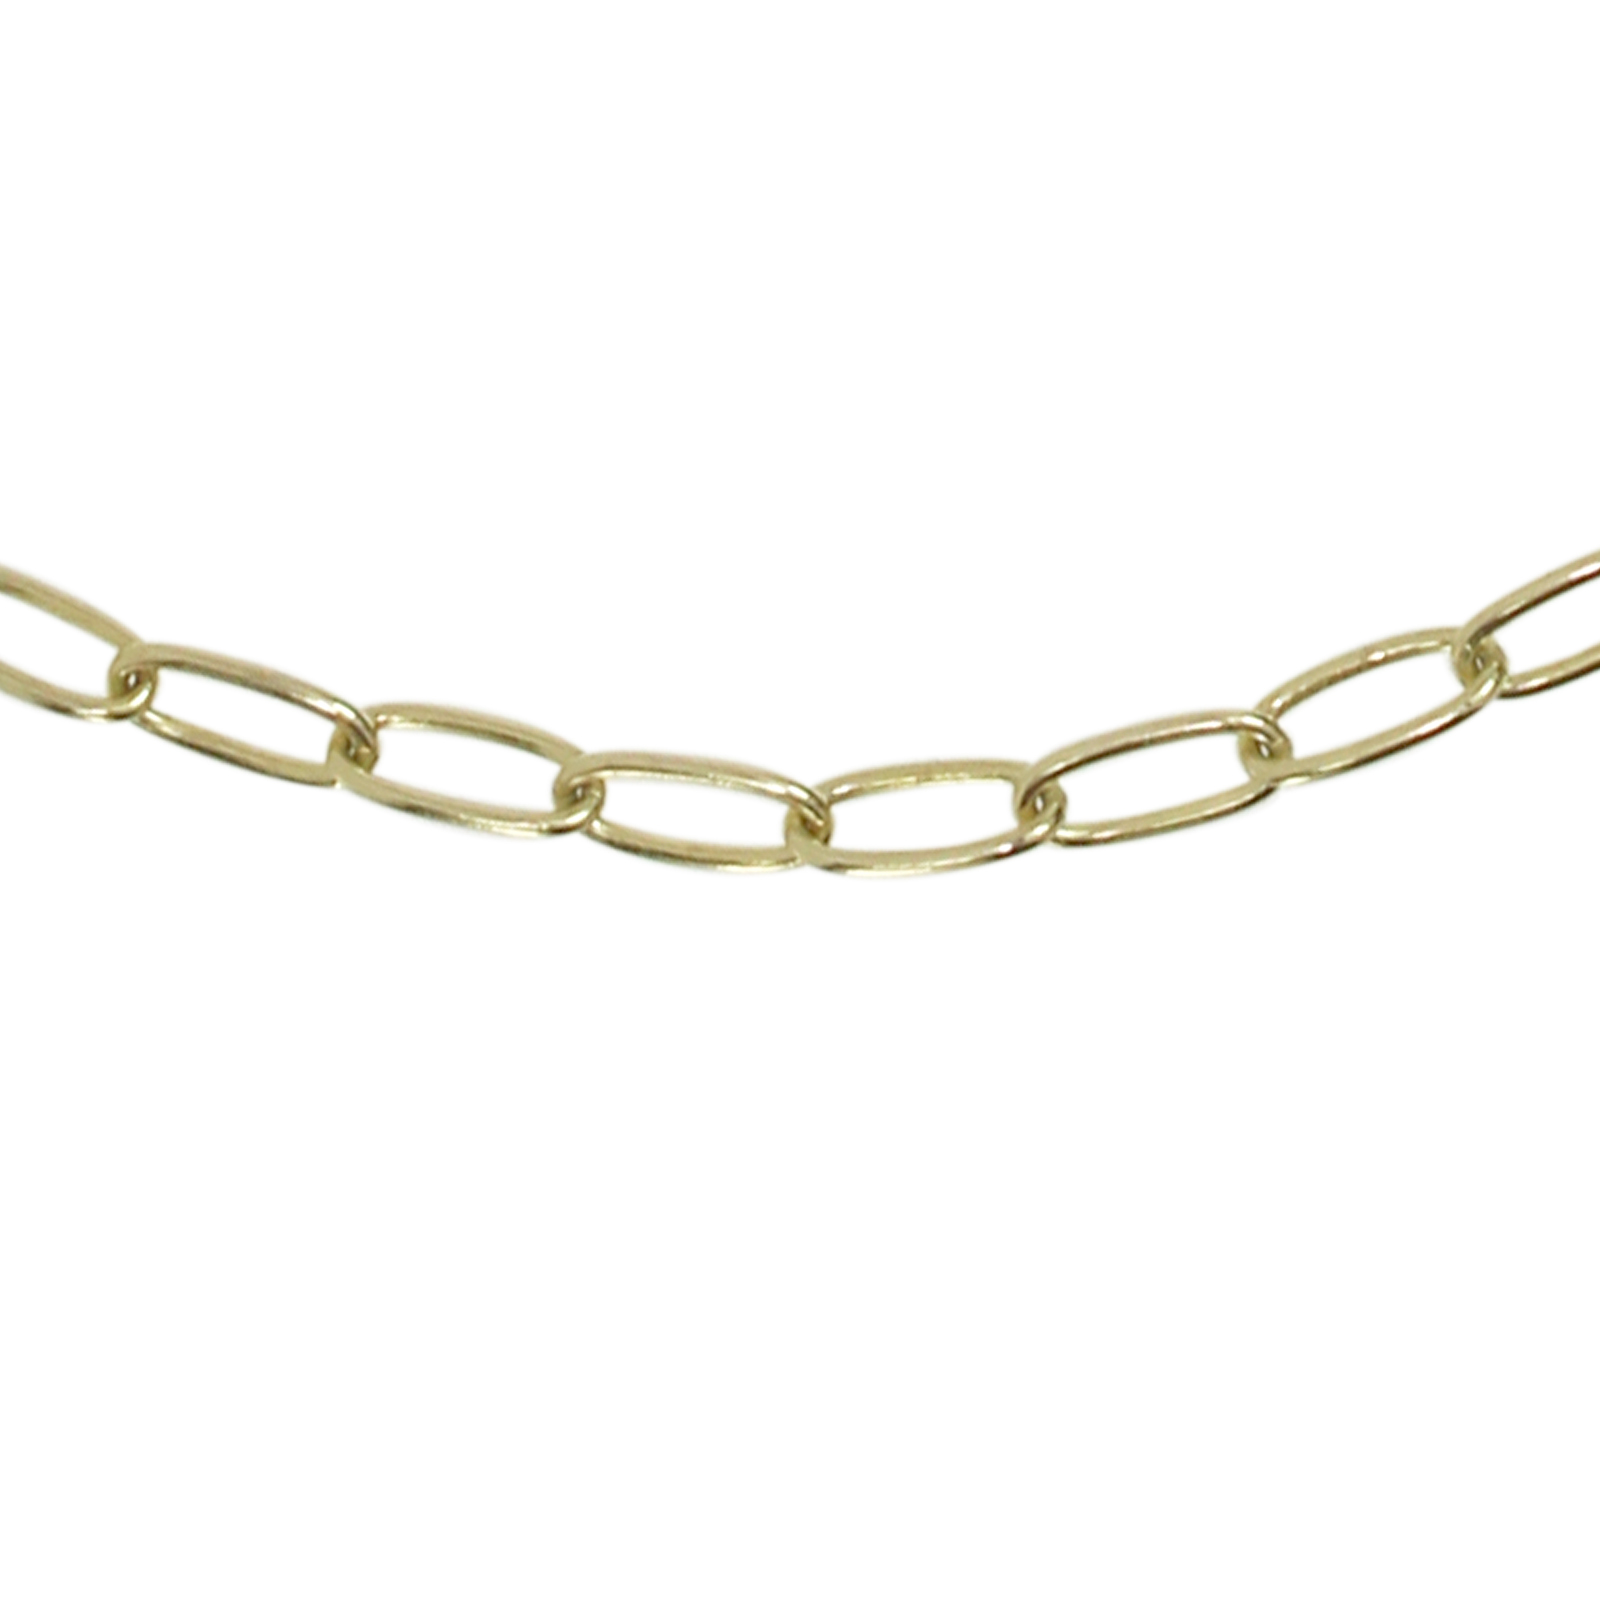 Goldarmband für Charms Gold 333/000, 19 cm